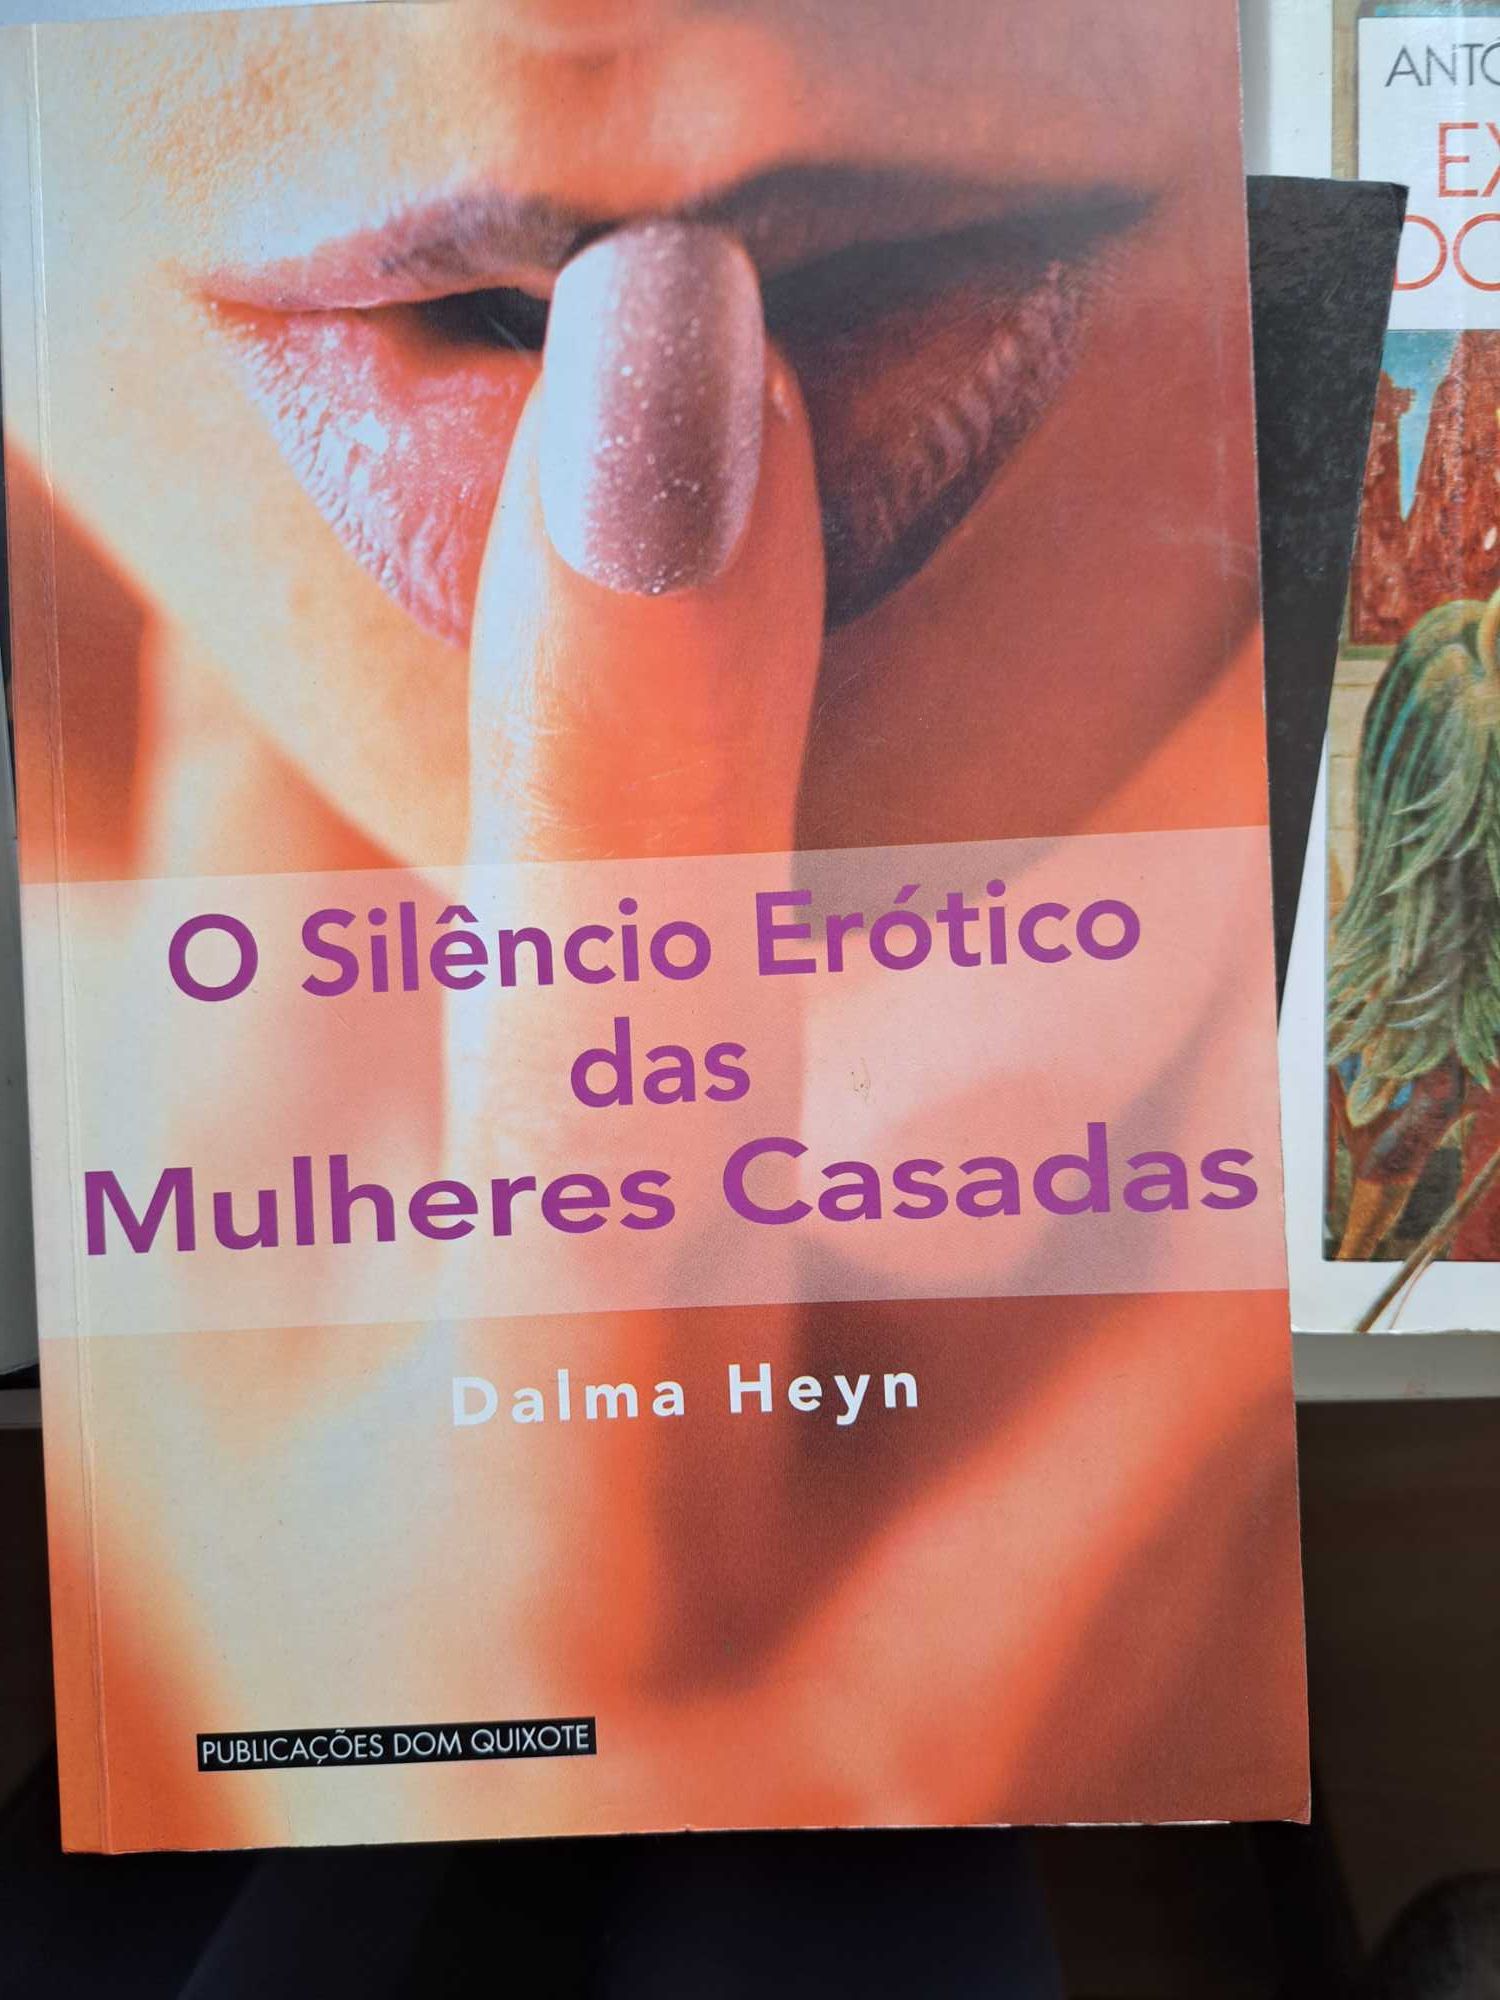 O Silêncio Erótico das Mulheres Casadas (Dalma Heyn)